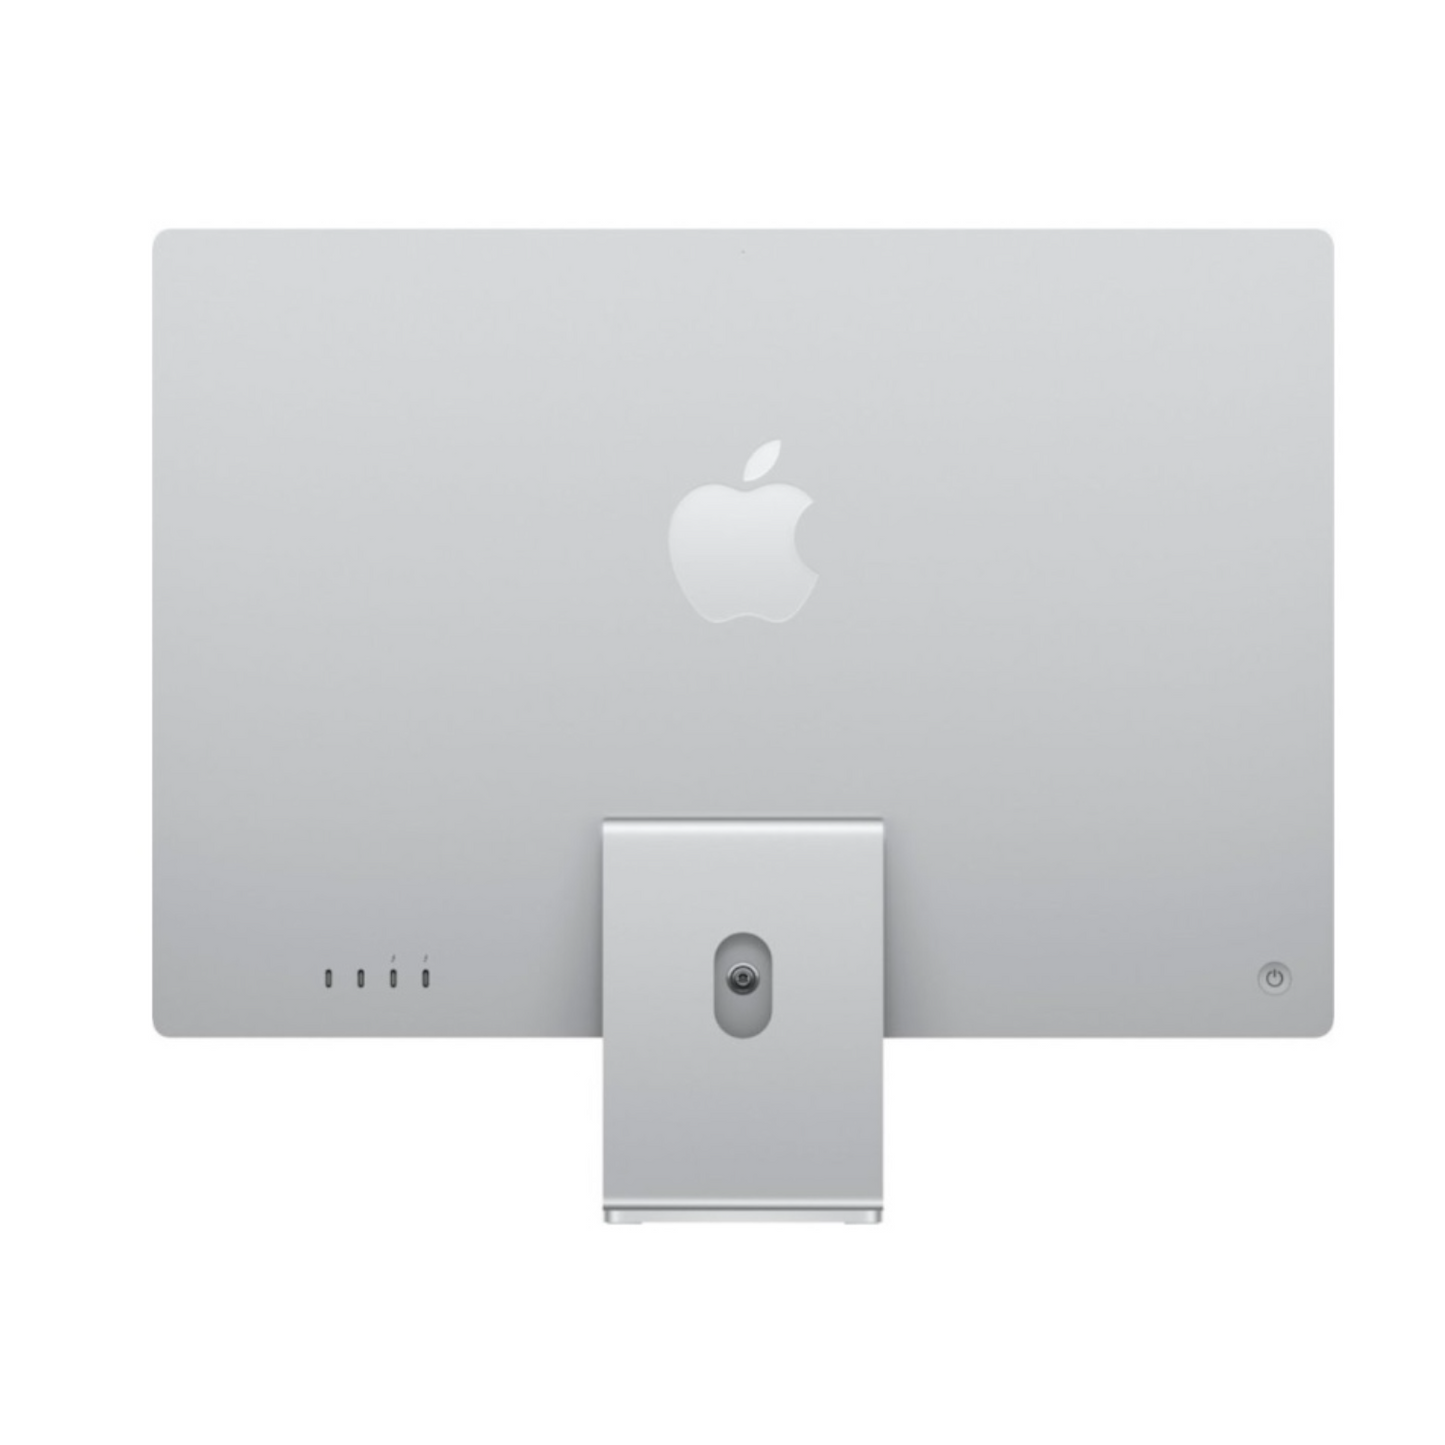 24" iMac with Retina 4.5K display Certified Used - Apple M1 - 8GB Memory - 256GB SSD